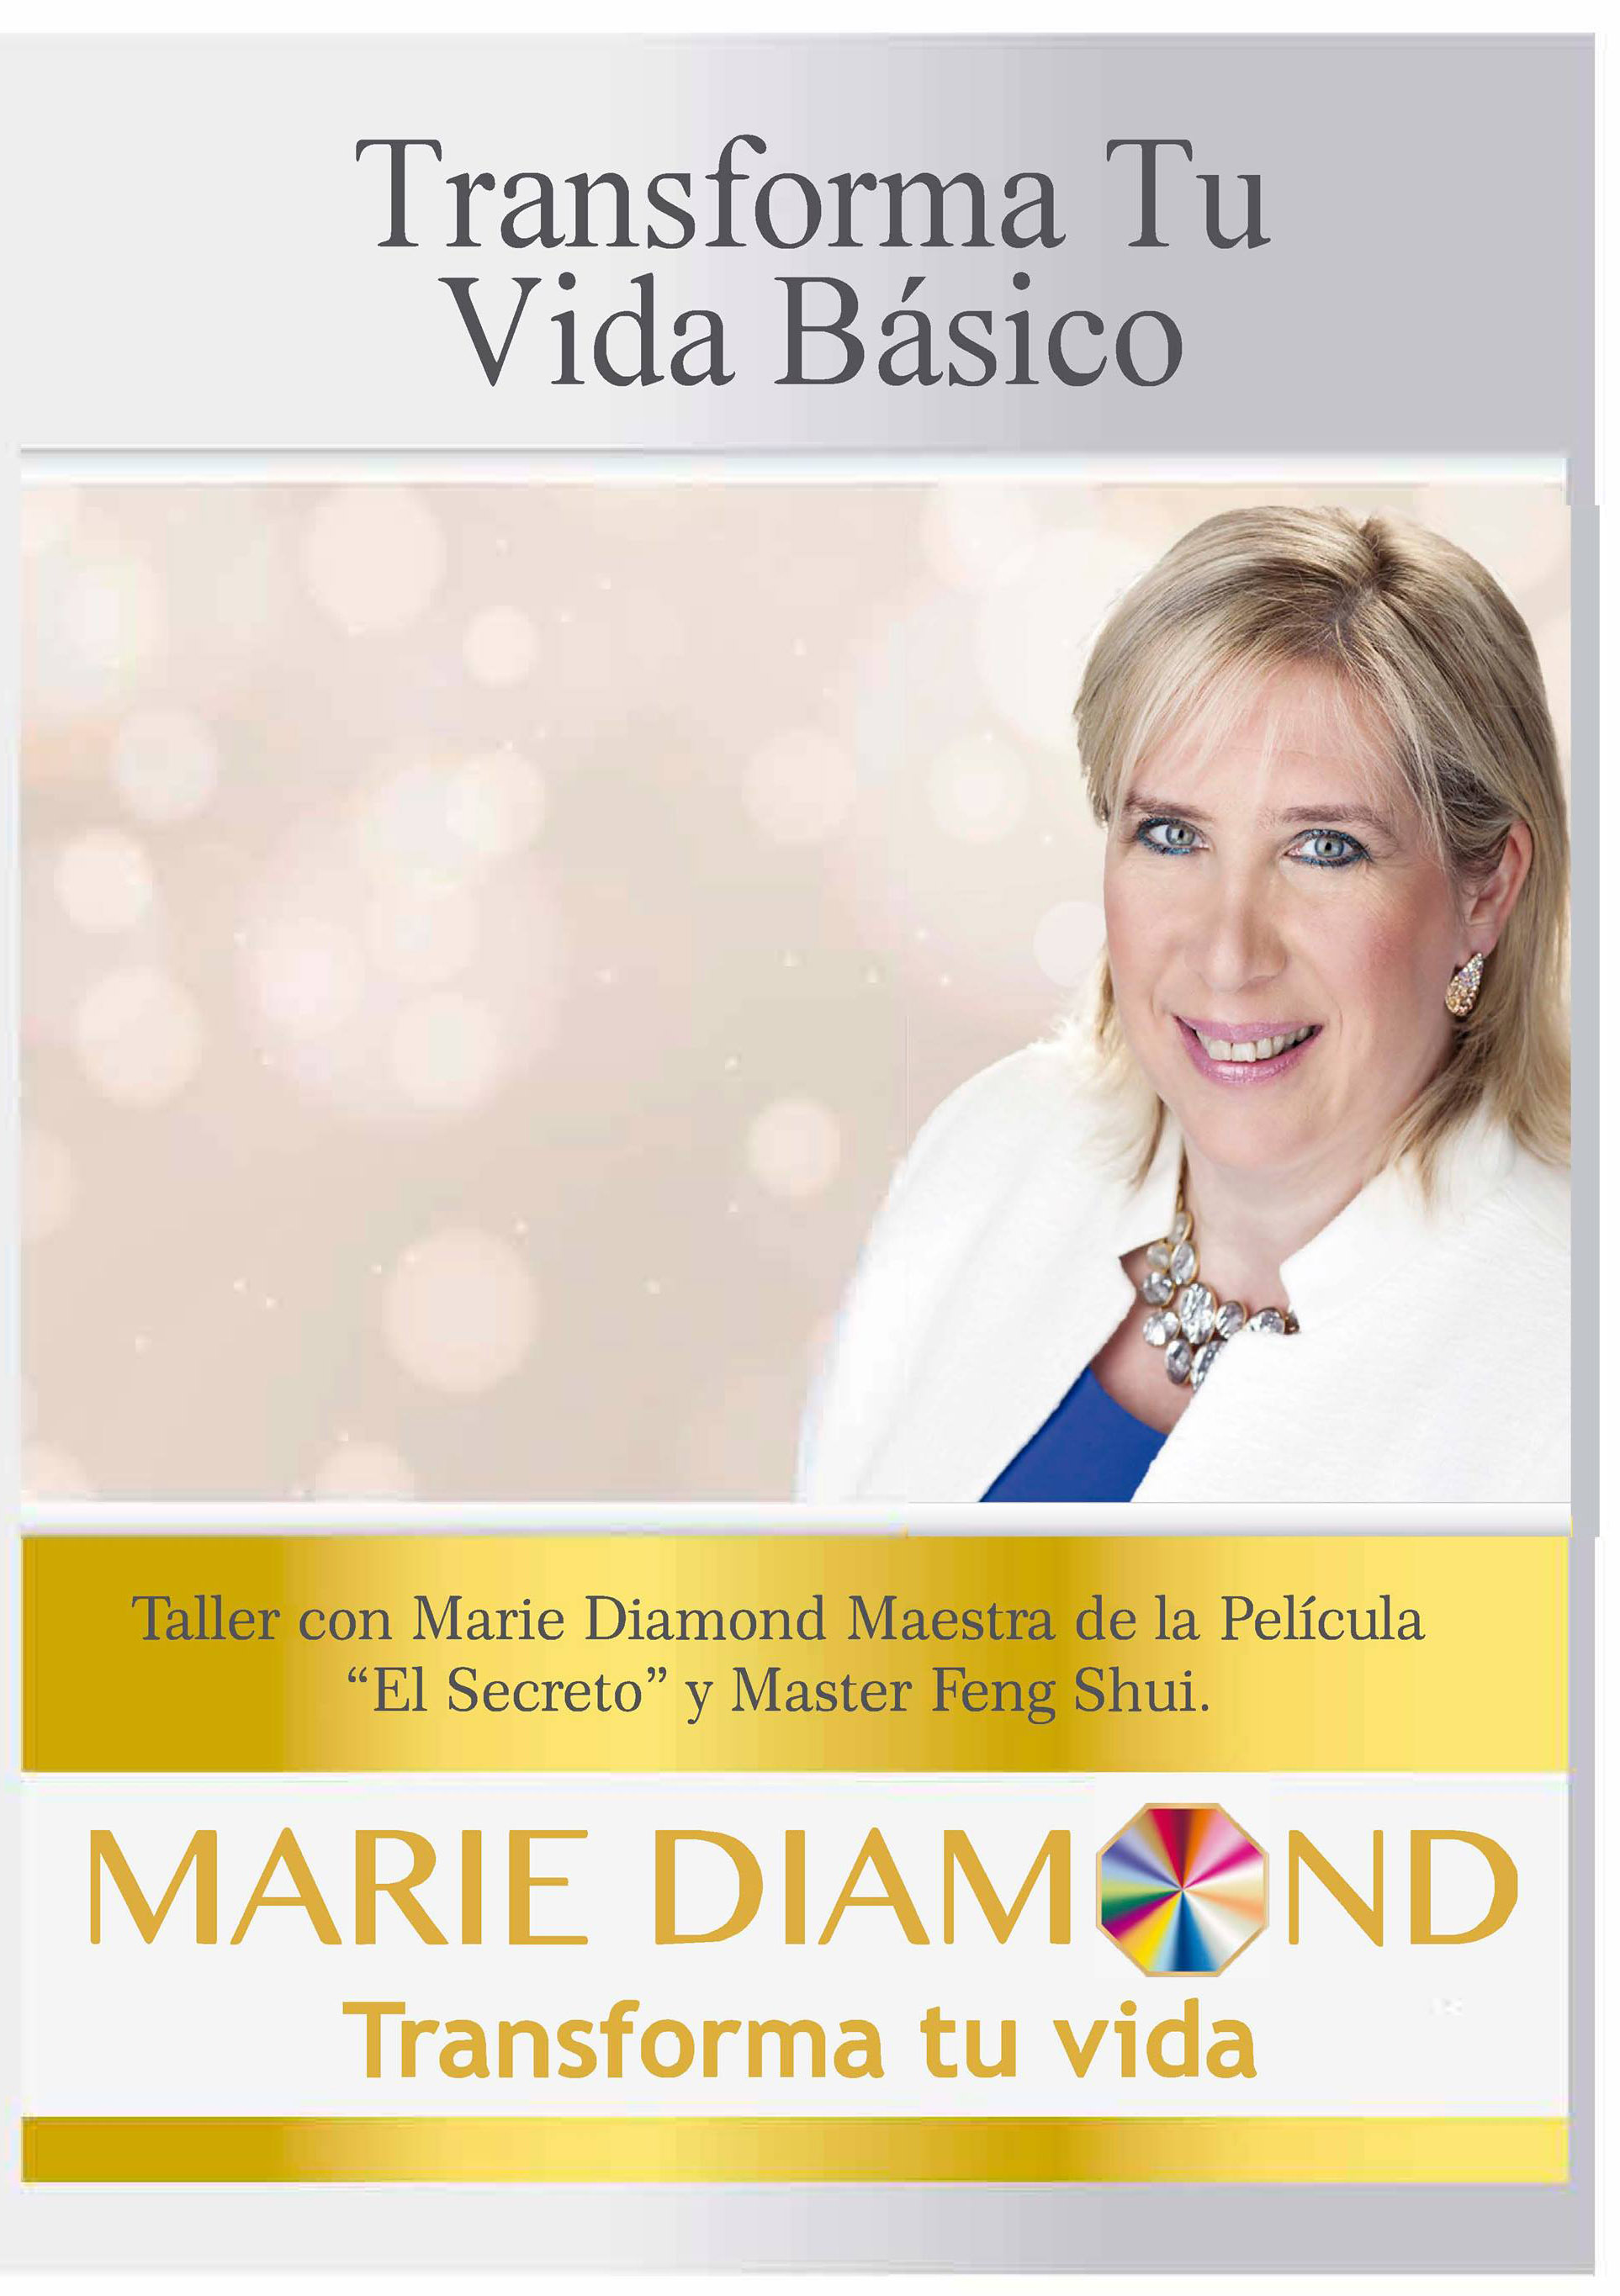 Transforma tu vida Marie Diamond